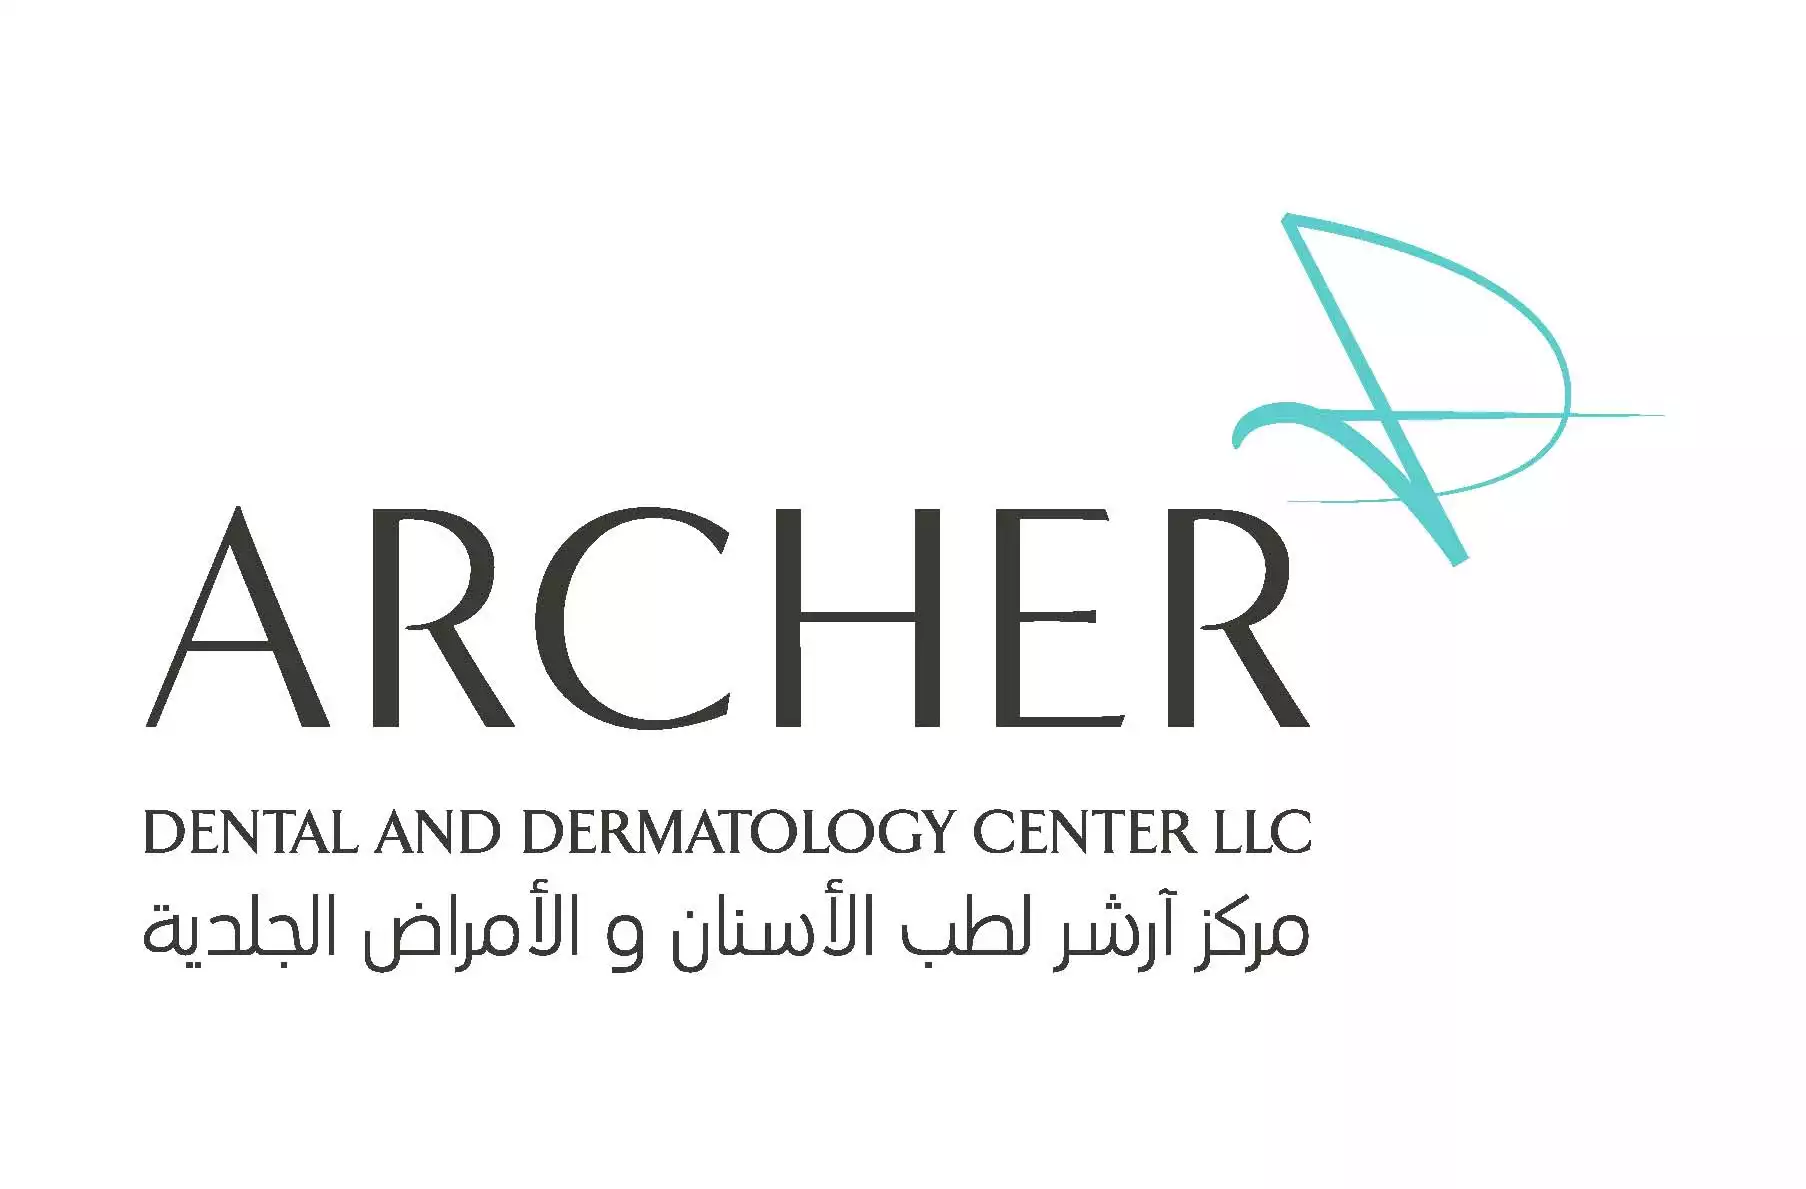 Archer Dental and Dermatology Center